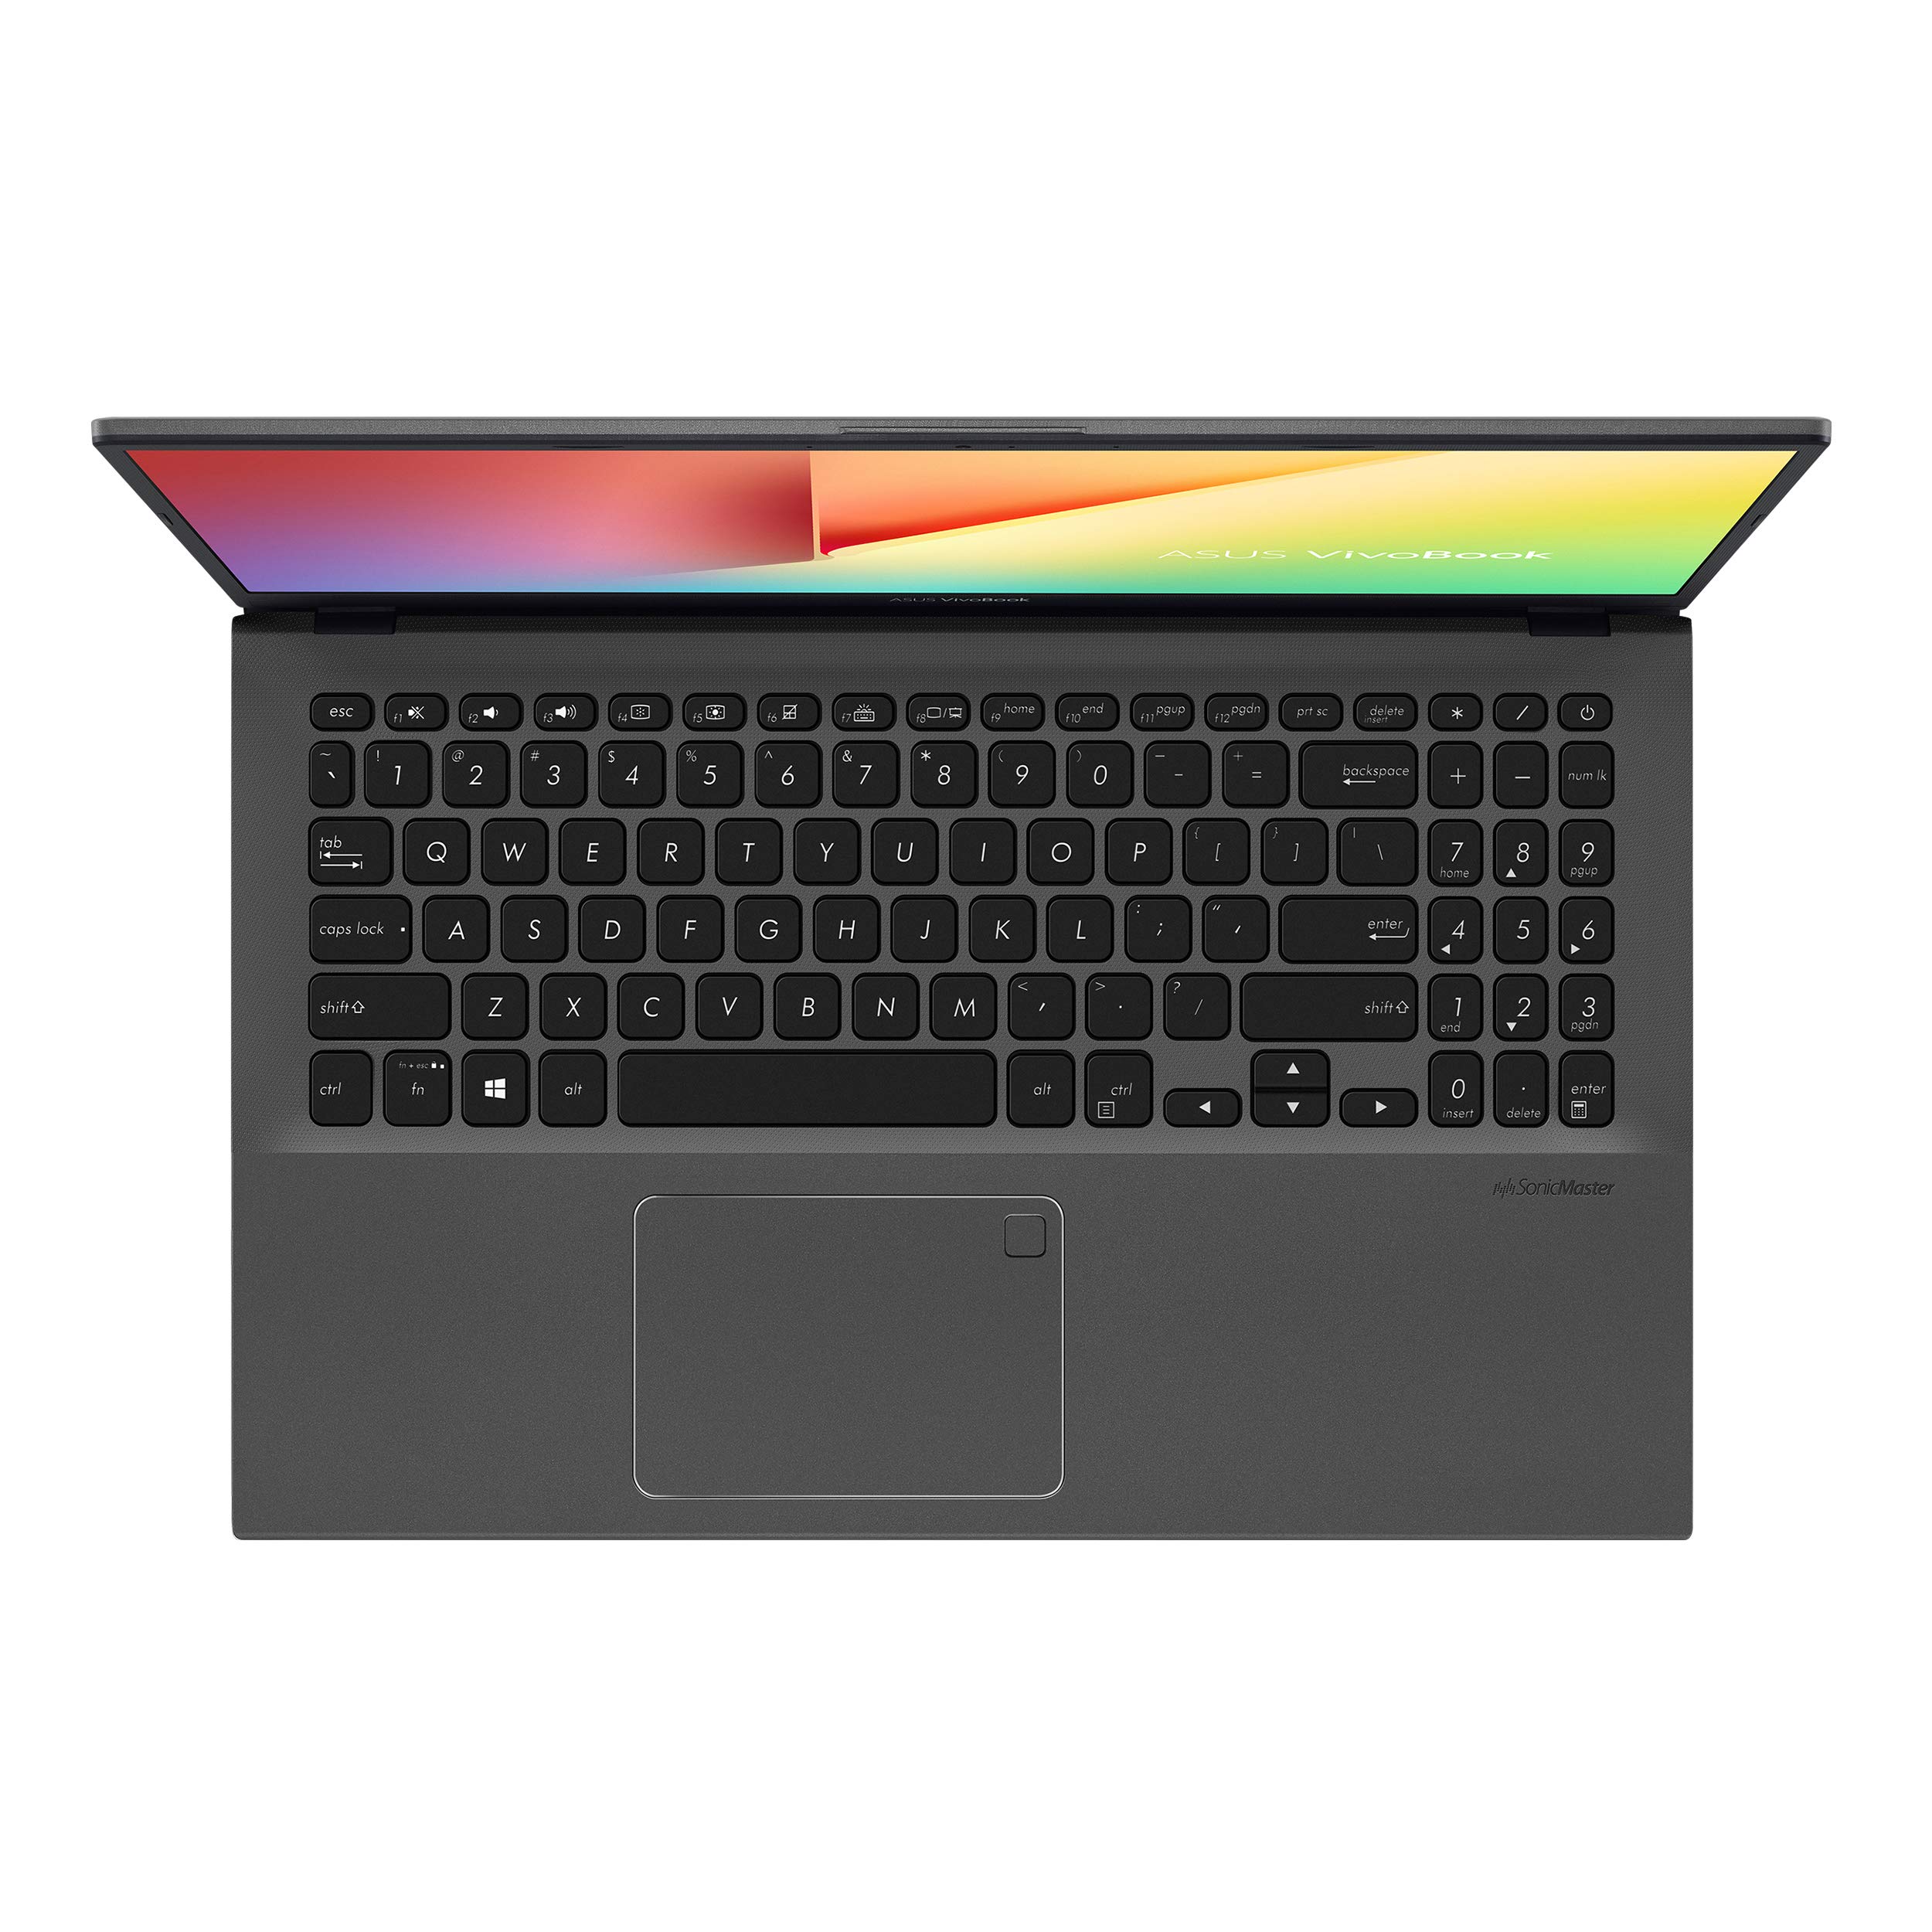 ASUS VivoBook F512 Thin and Lightweight Laptop, 15.6” FHD WideView NanoEdge , AMD R5-3500U CPU, 8GB RAM, 256GB SSD, Backlit KB, Fingerprint Reader, Windows 10, Peacock Blue, F512DA-EB51